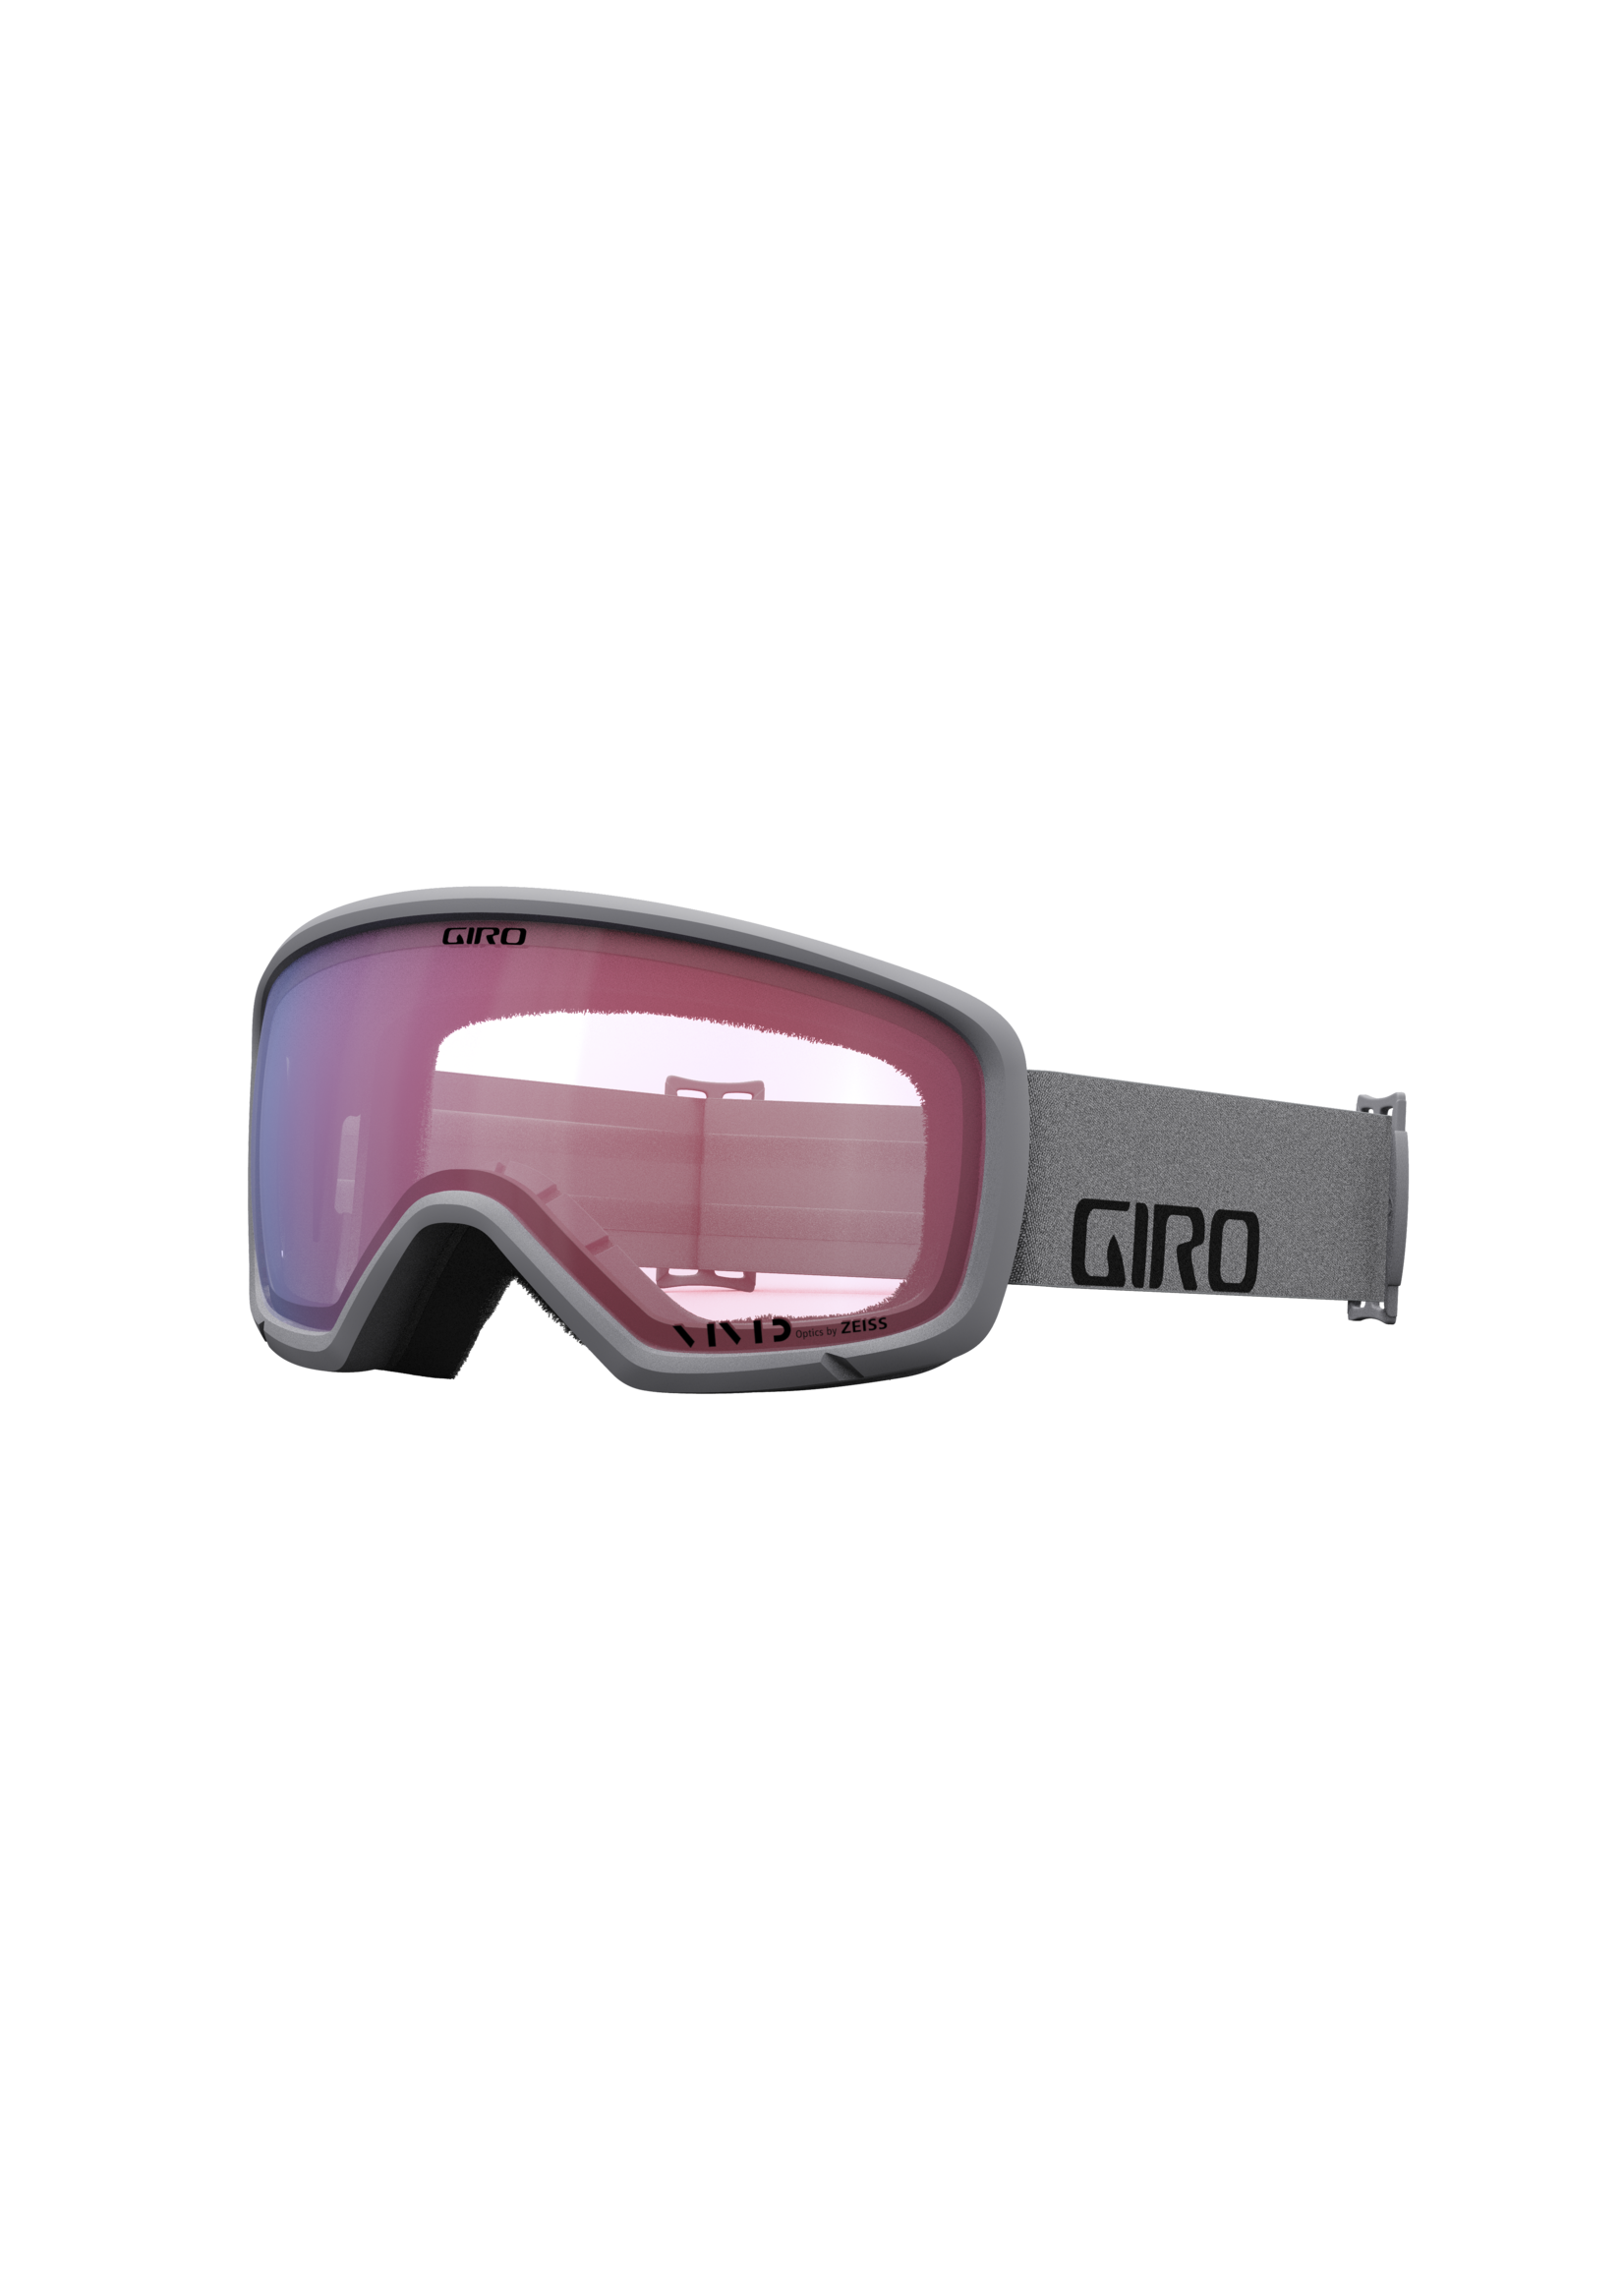 Giro Giro Ringo Snow Goggle